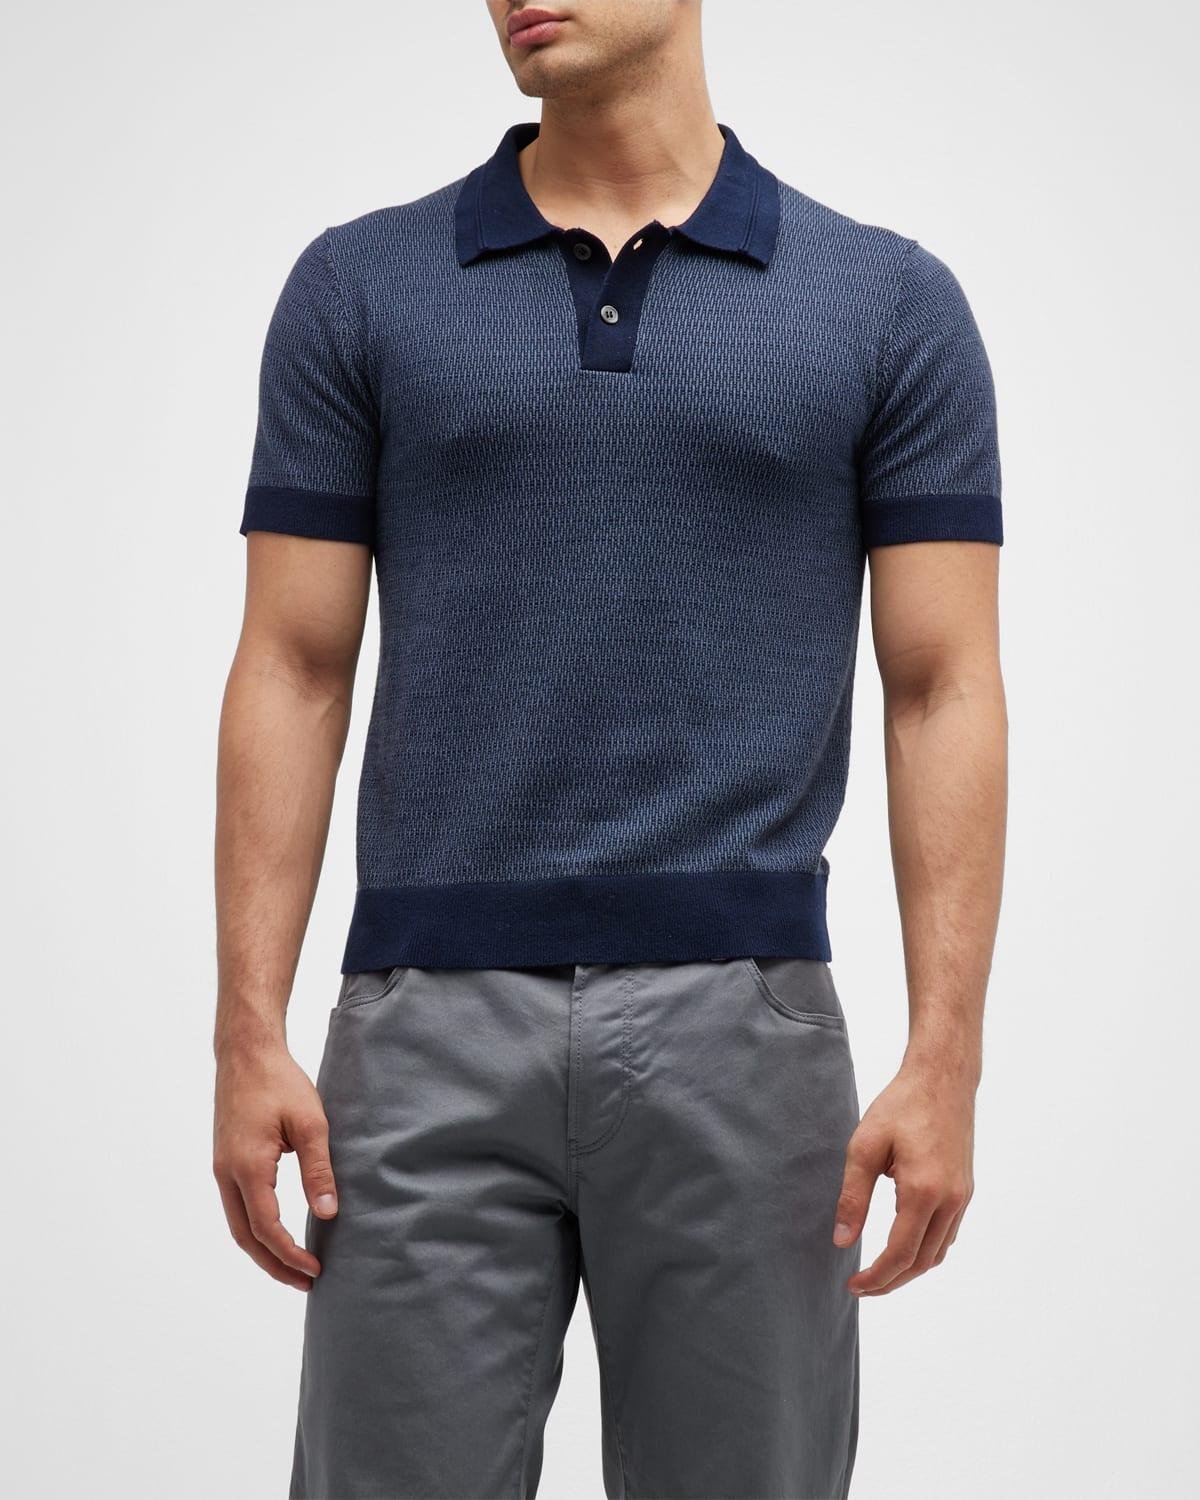 Men's Shoreditch Two-Tone Knit Polo Shirt by RAILS